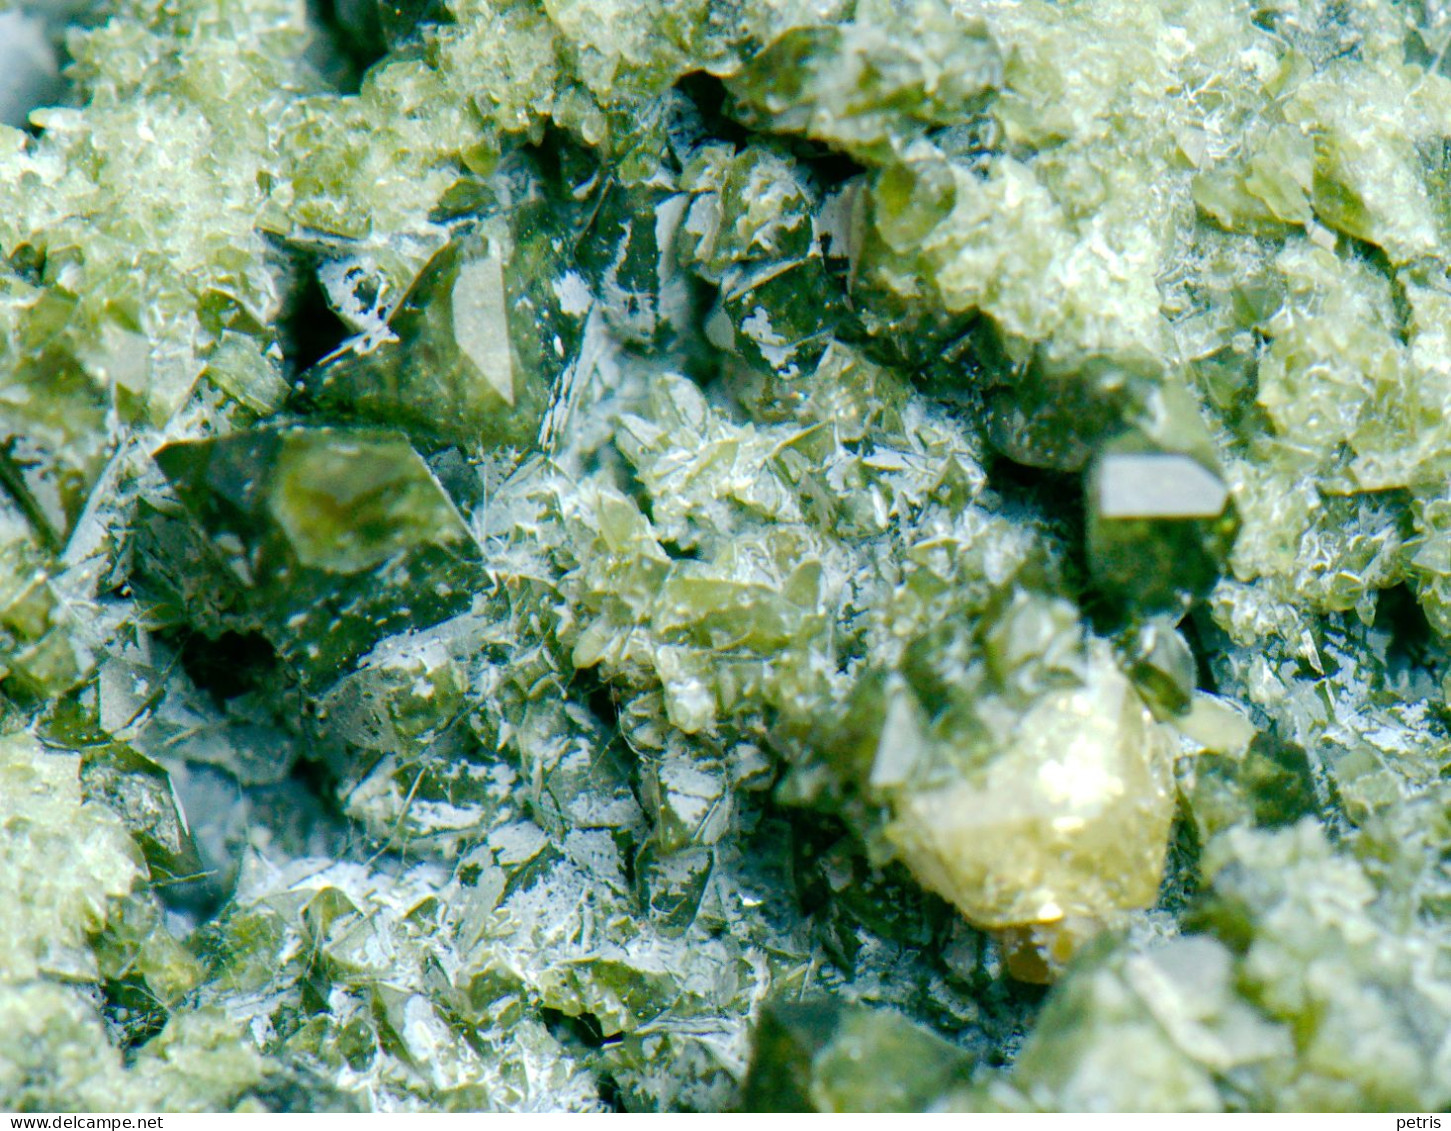 Mineral - Linnaeite (Hilchenbach, North Rhine, Westfalia, Germany) - Lot. 1160